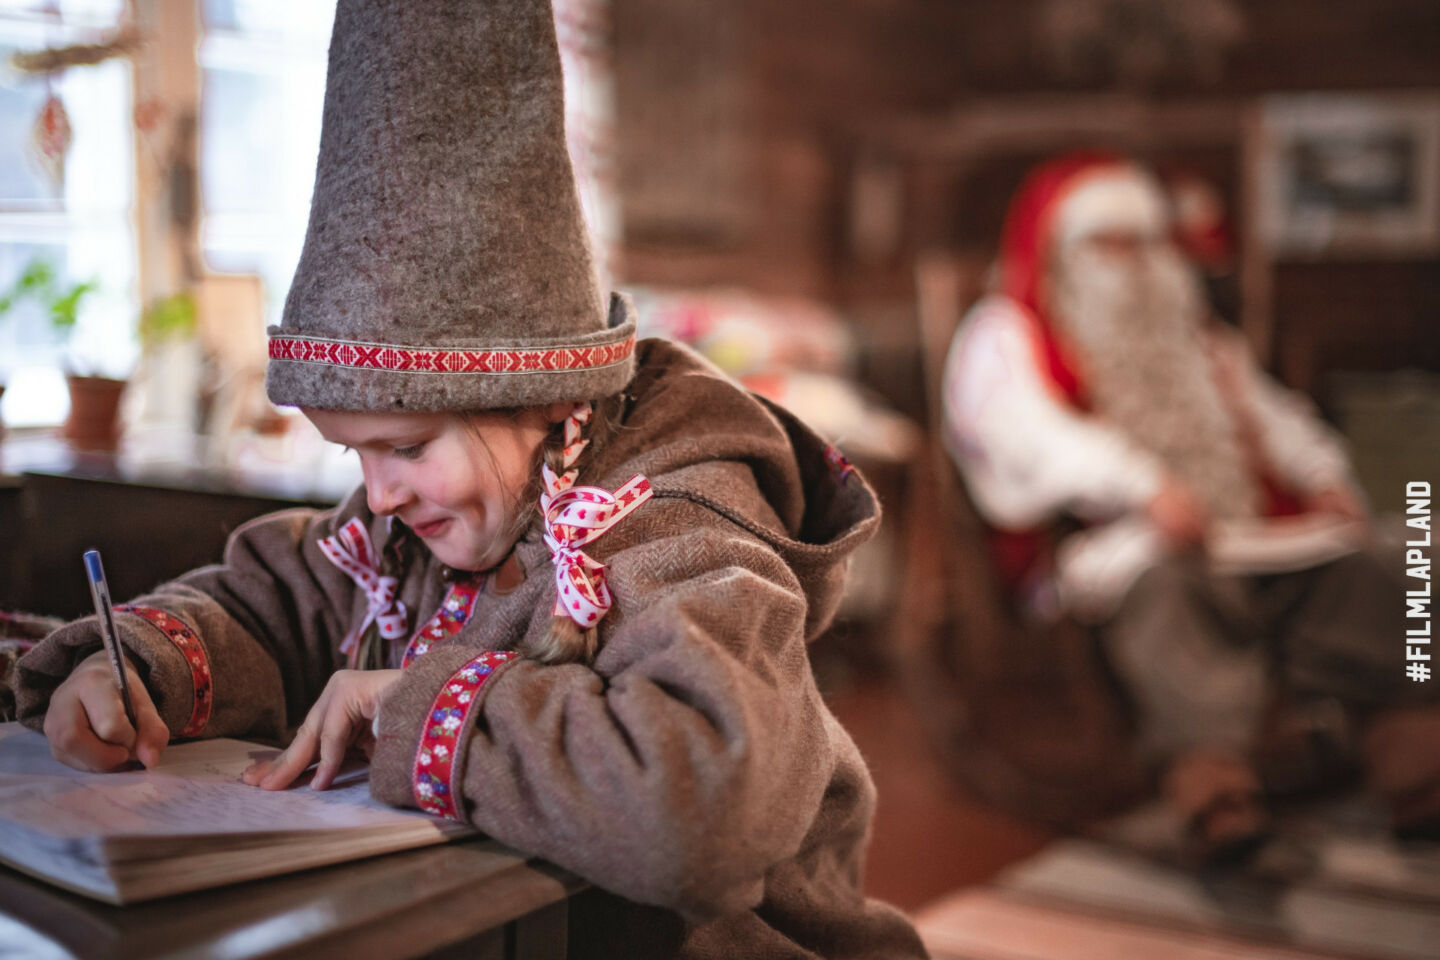 A child elf writes a letter while Santa watches in Savukoski, Finland